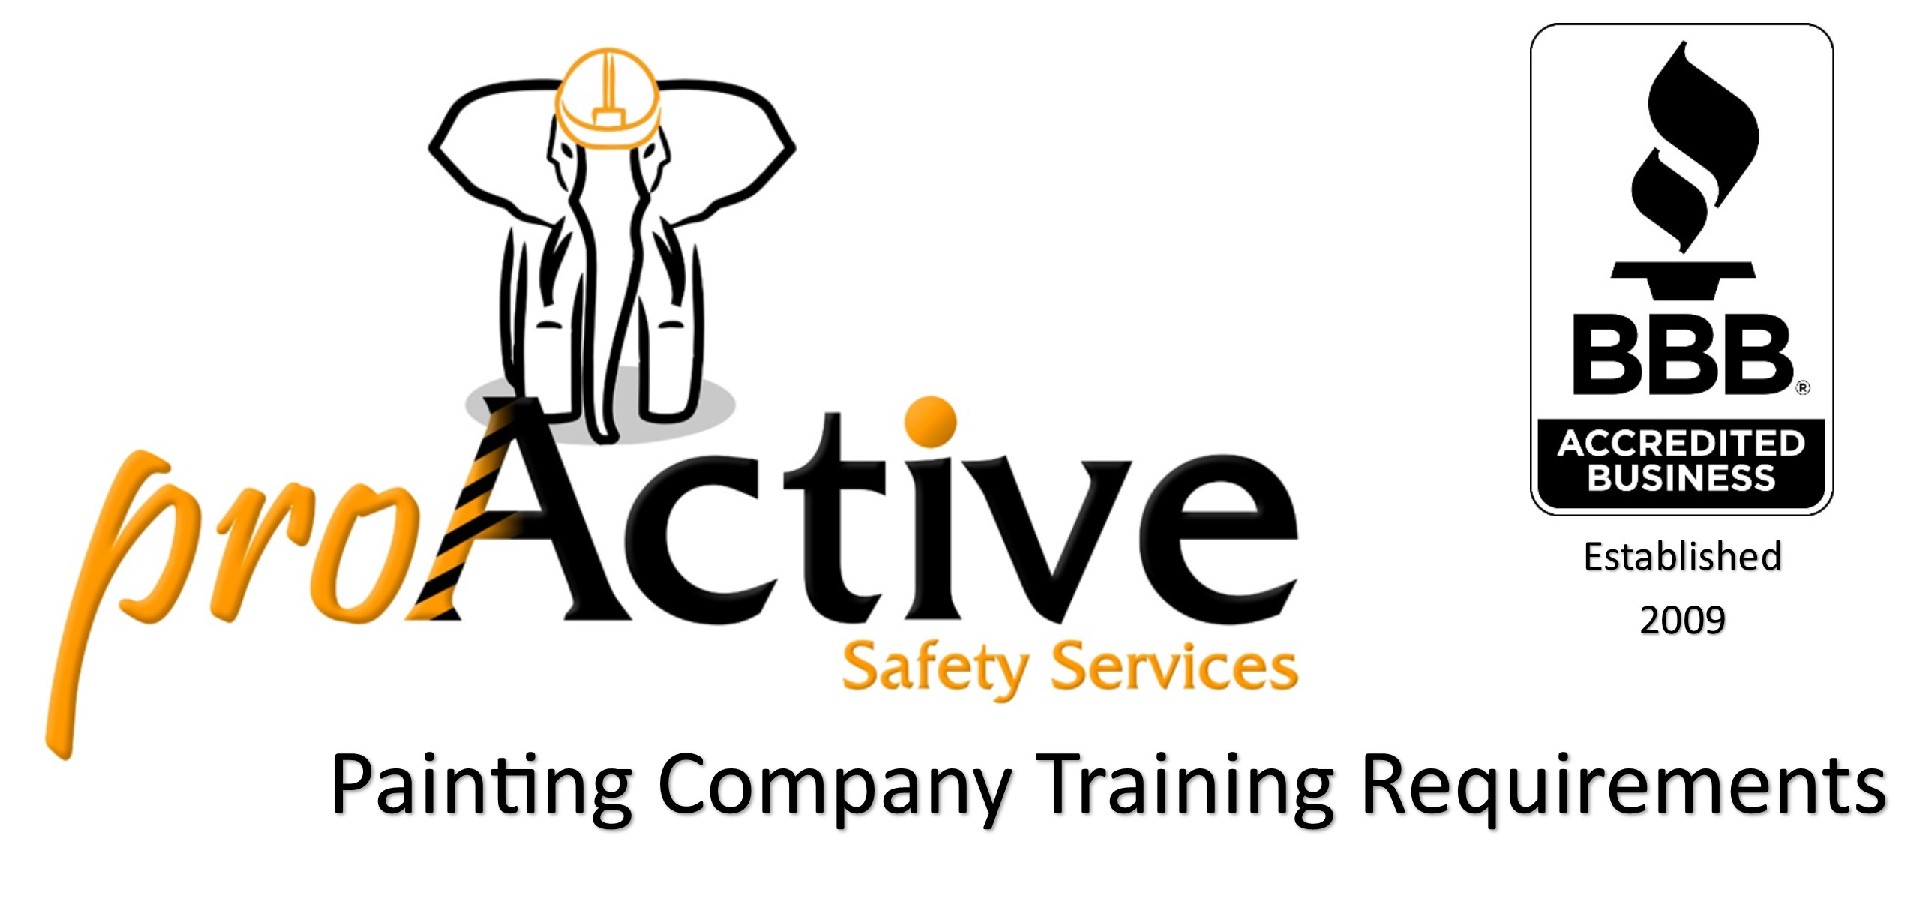 Harrisburg EPA RRP Initial Certification – Lead Renovator Training - Harrisburg, PA - CONFIRMED COURSE